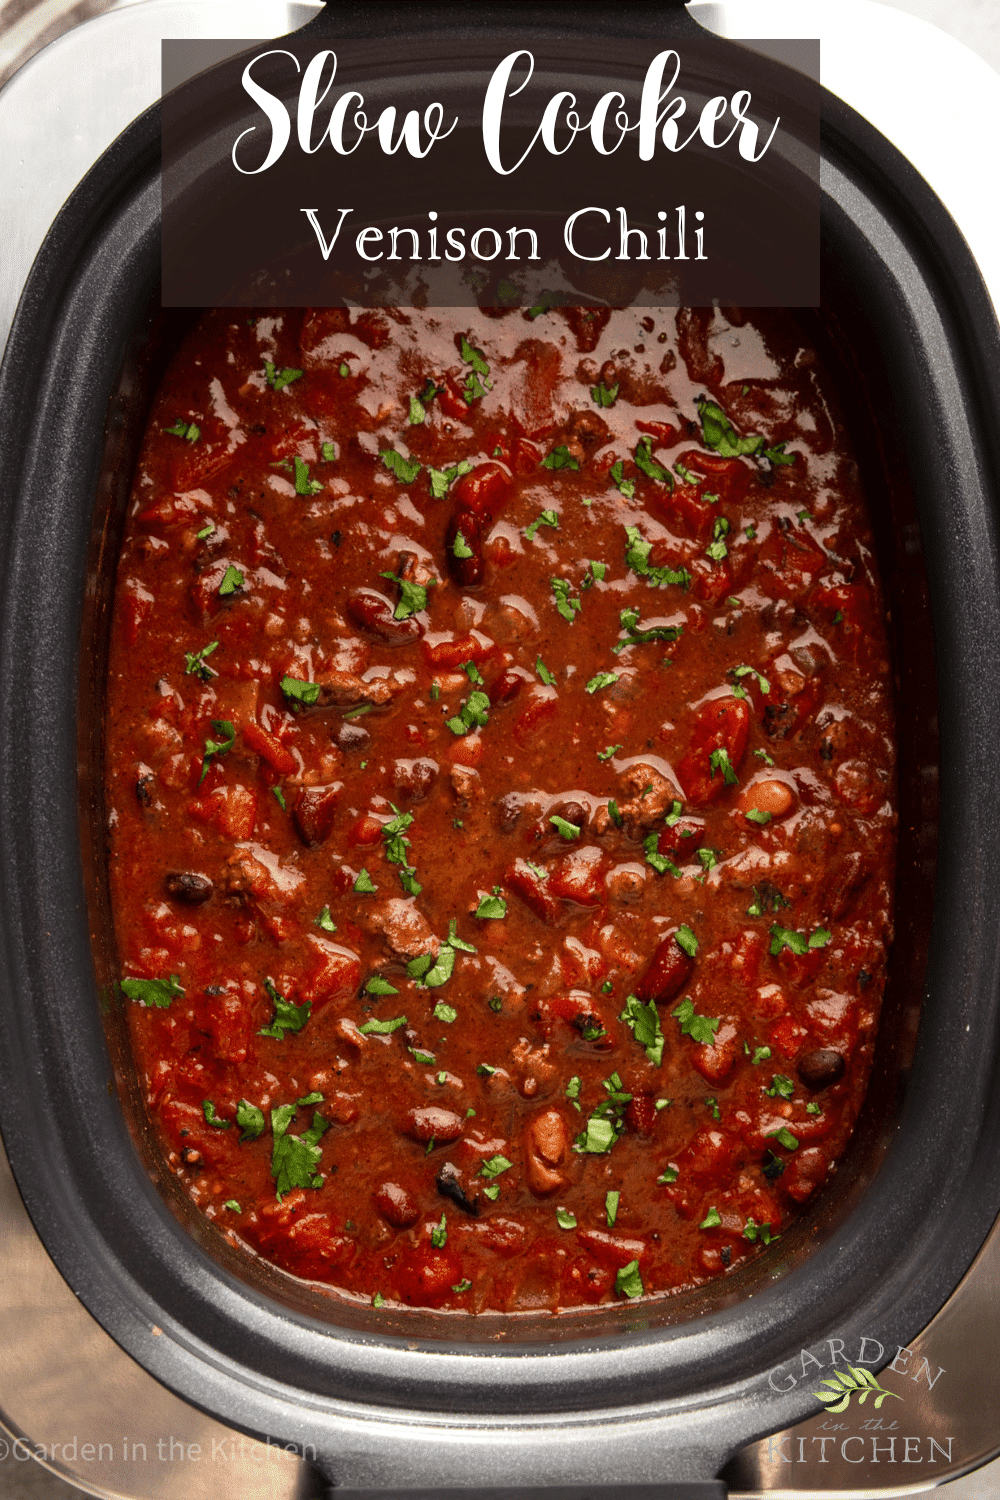 pinterest image of a large black slow cooker full of venison chili.